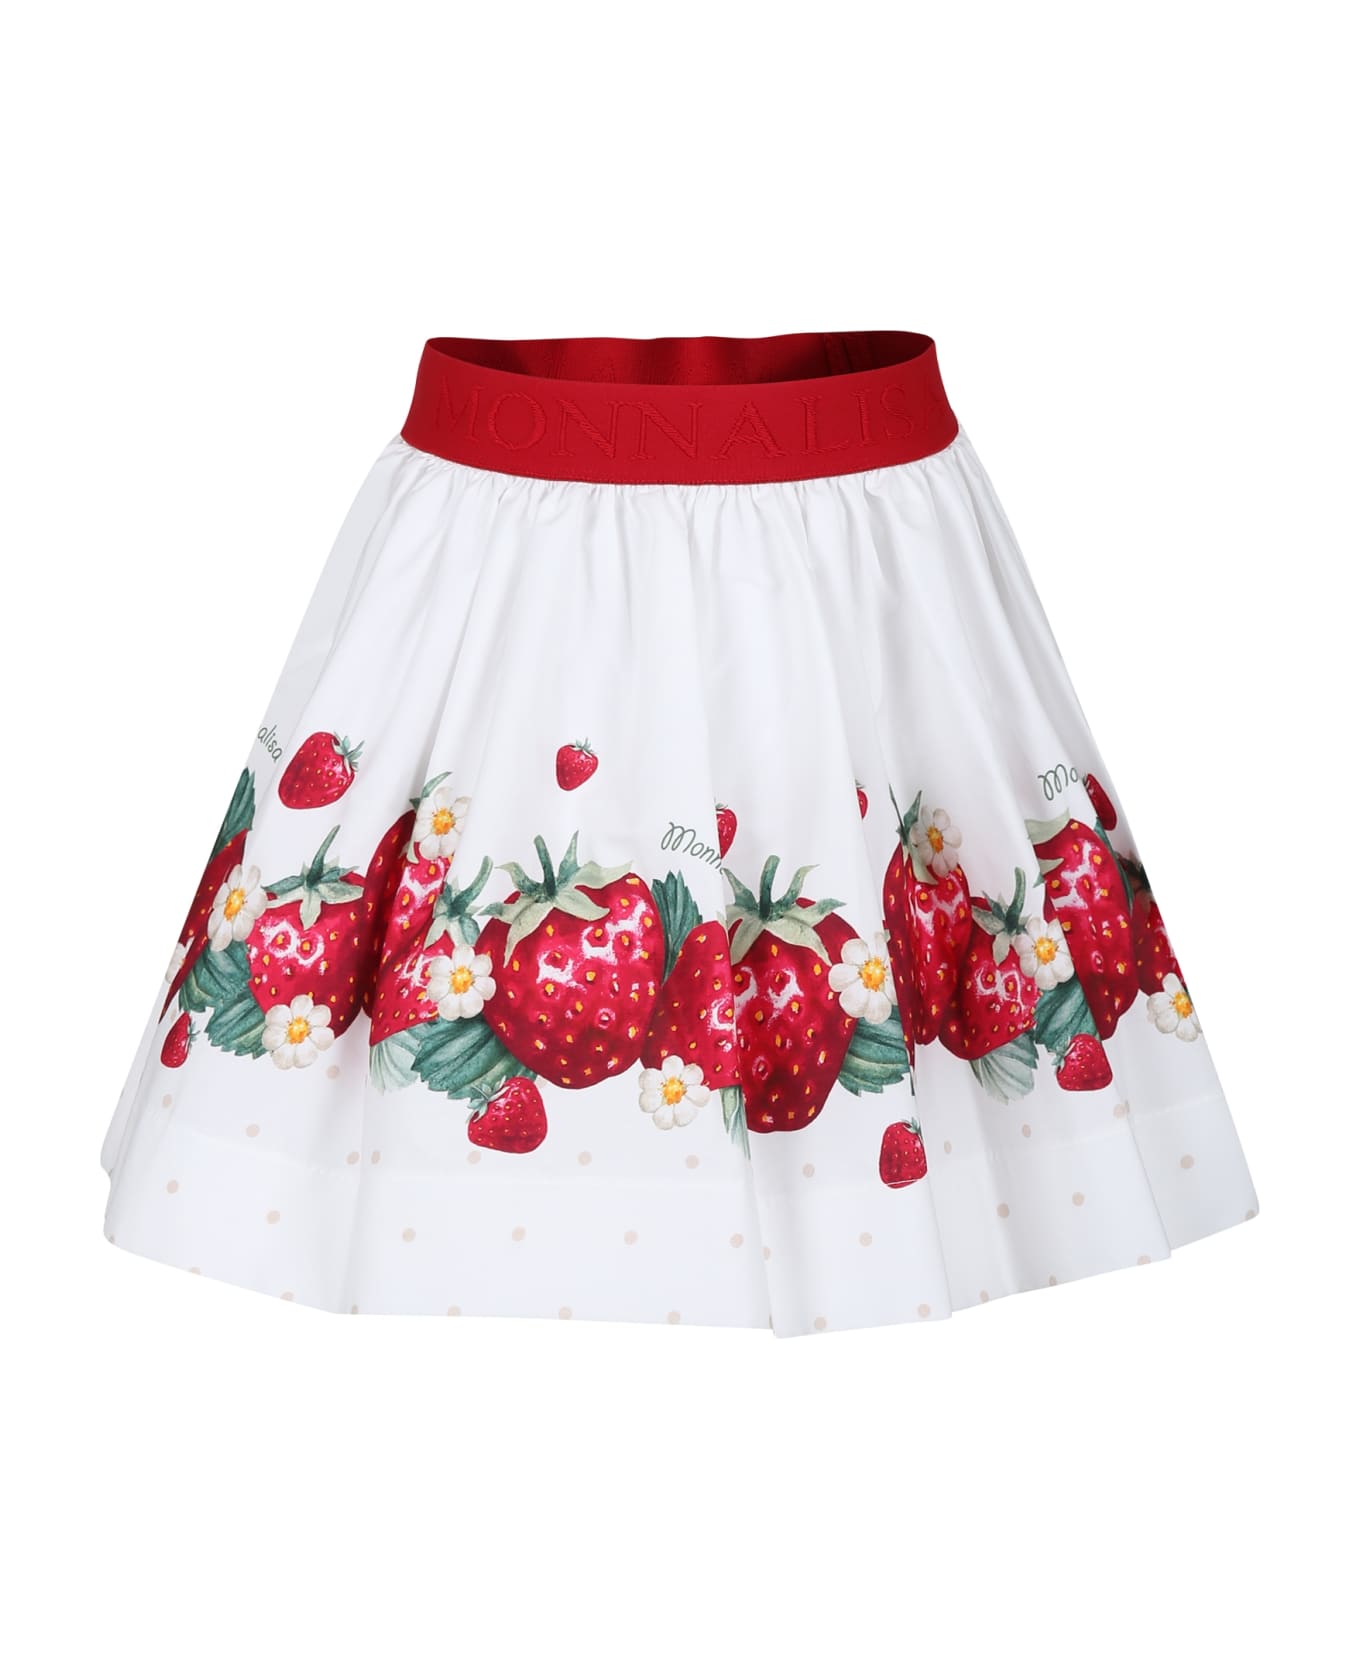 Monnalisa White Skirt For Girl With Strawberry Print - White